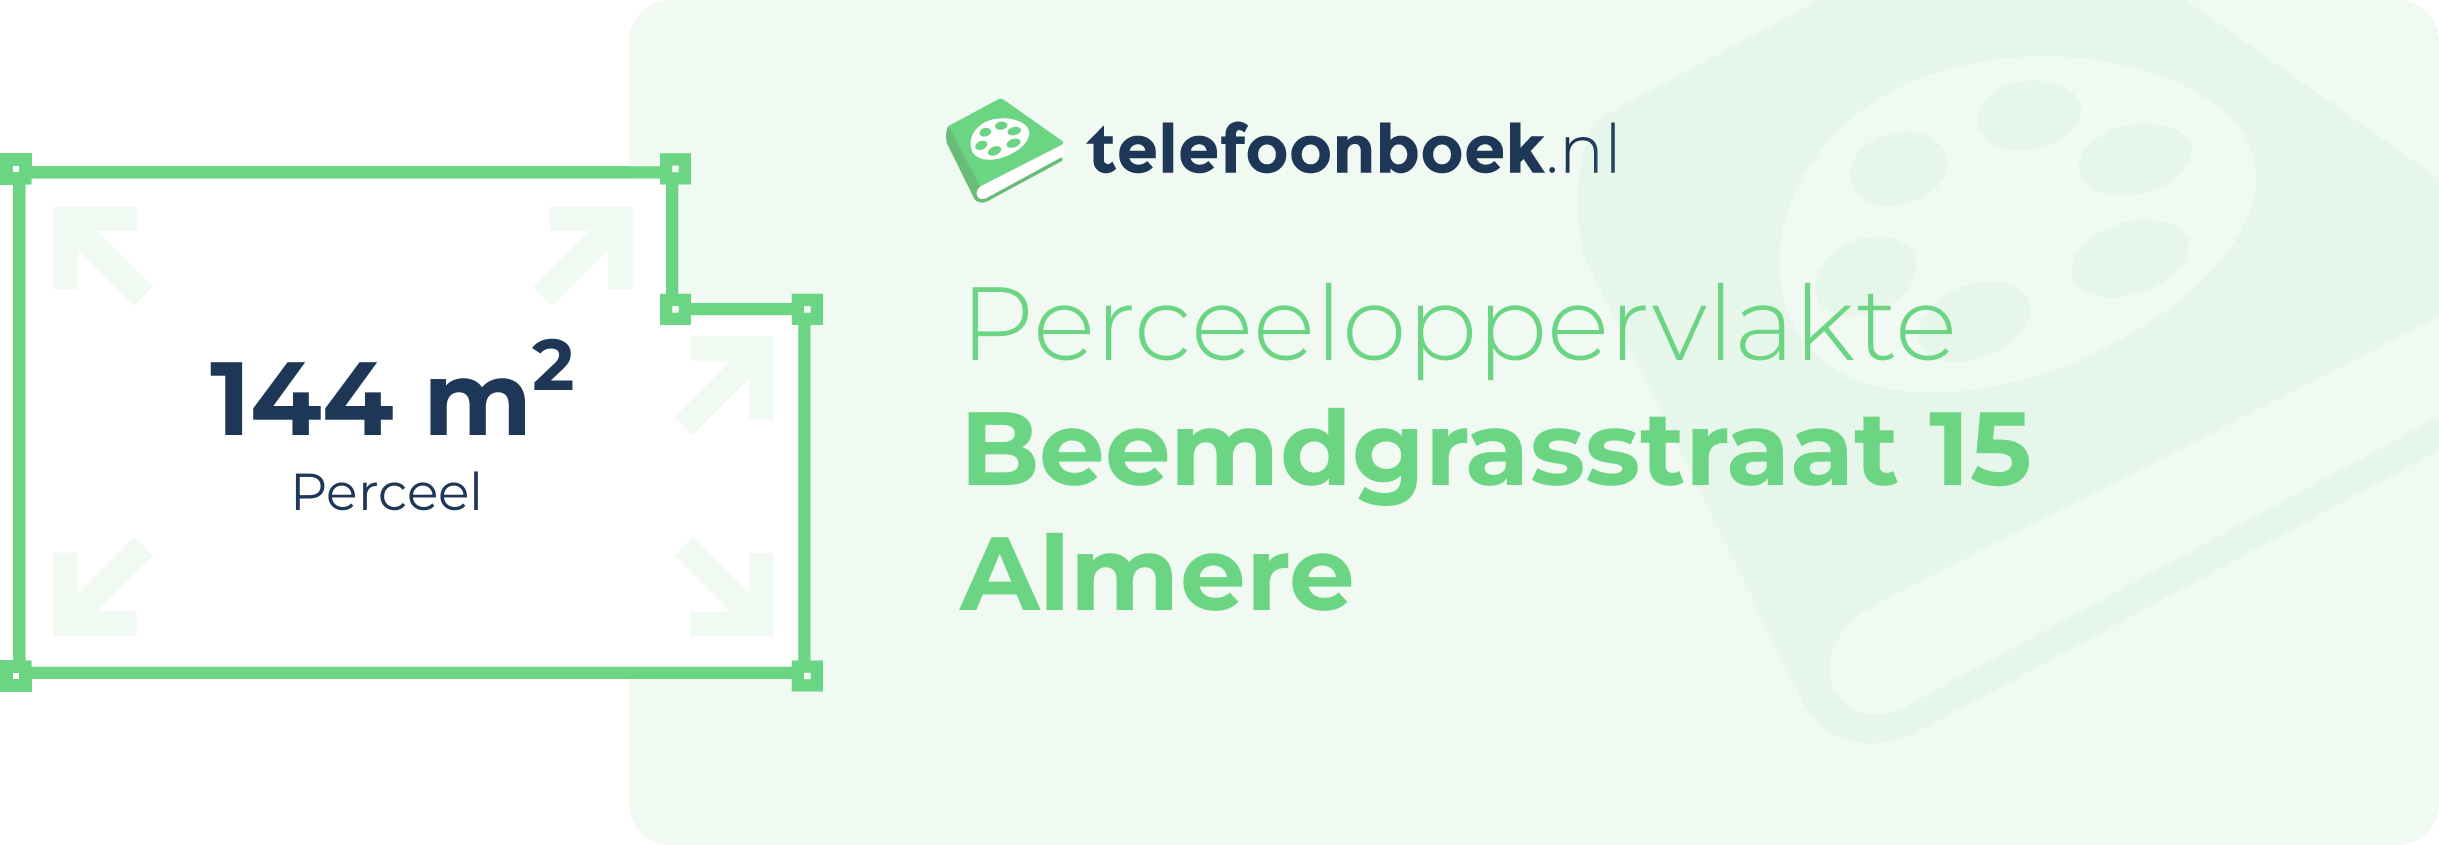 Perceeloppervlakte Beemdgrasstraat 15 Almere